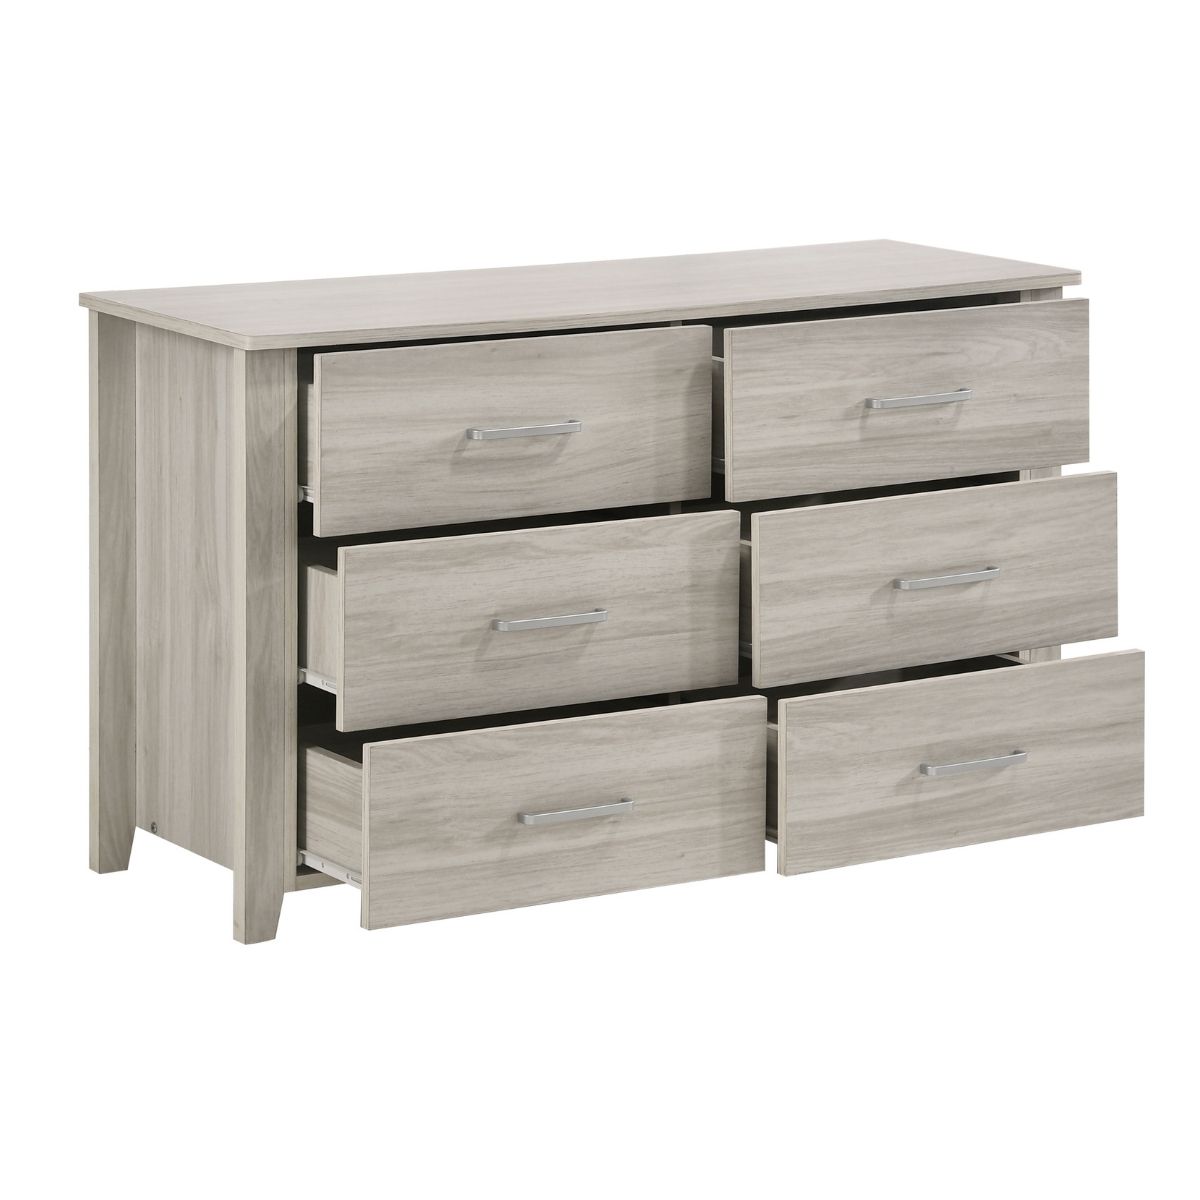 White 6 Chest of Drawers Bedroom Cabinet Storage Tallboy Dresser